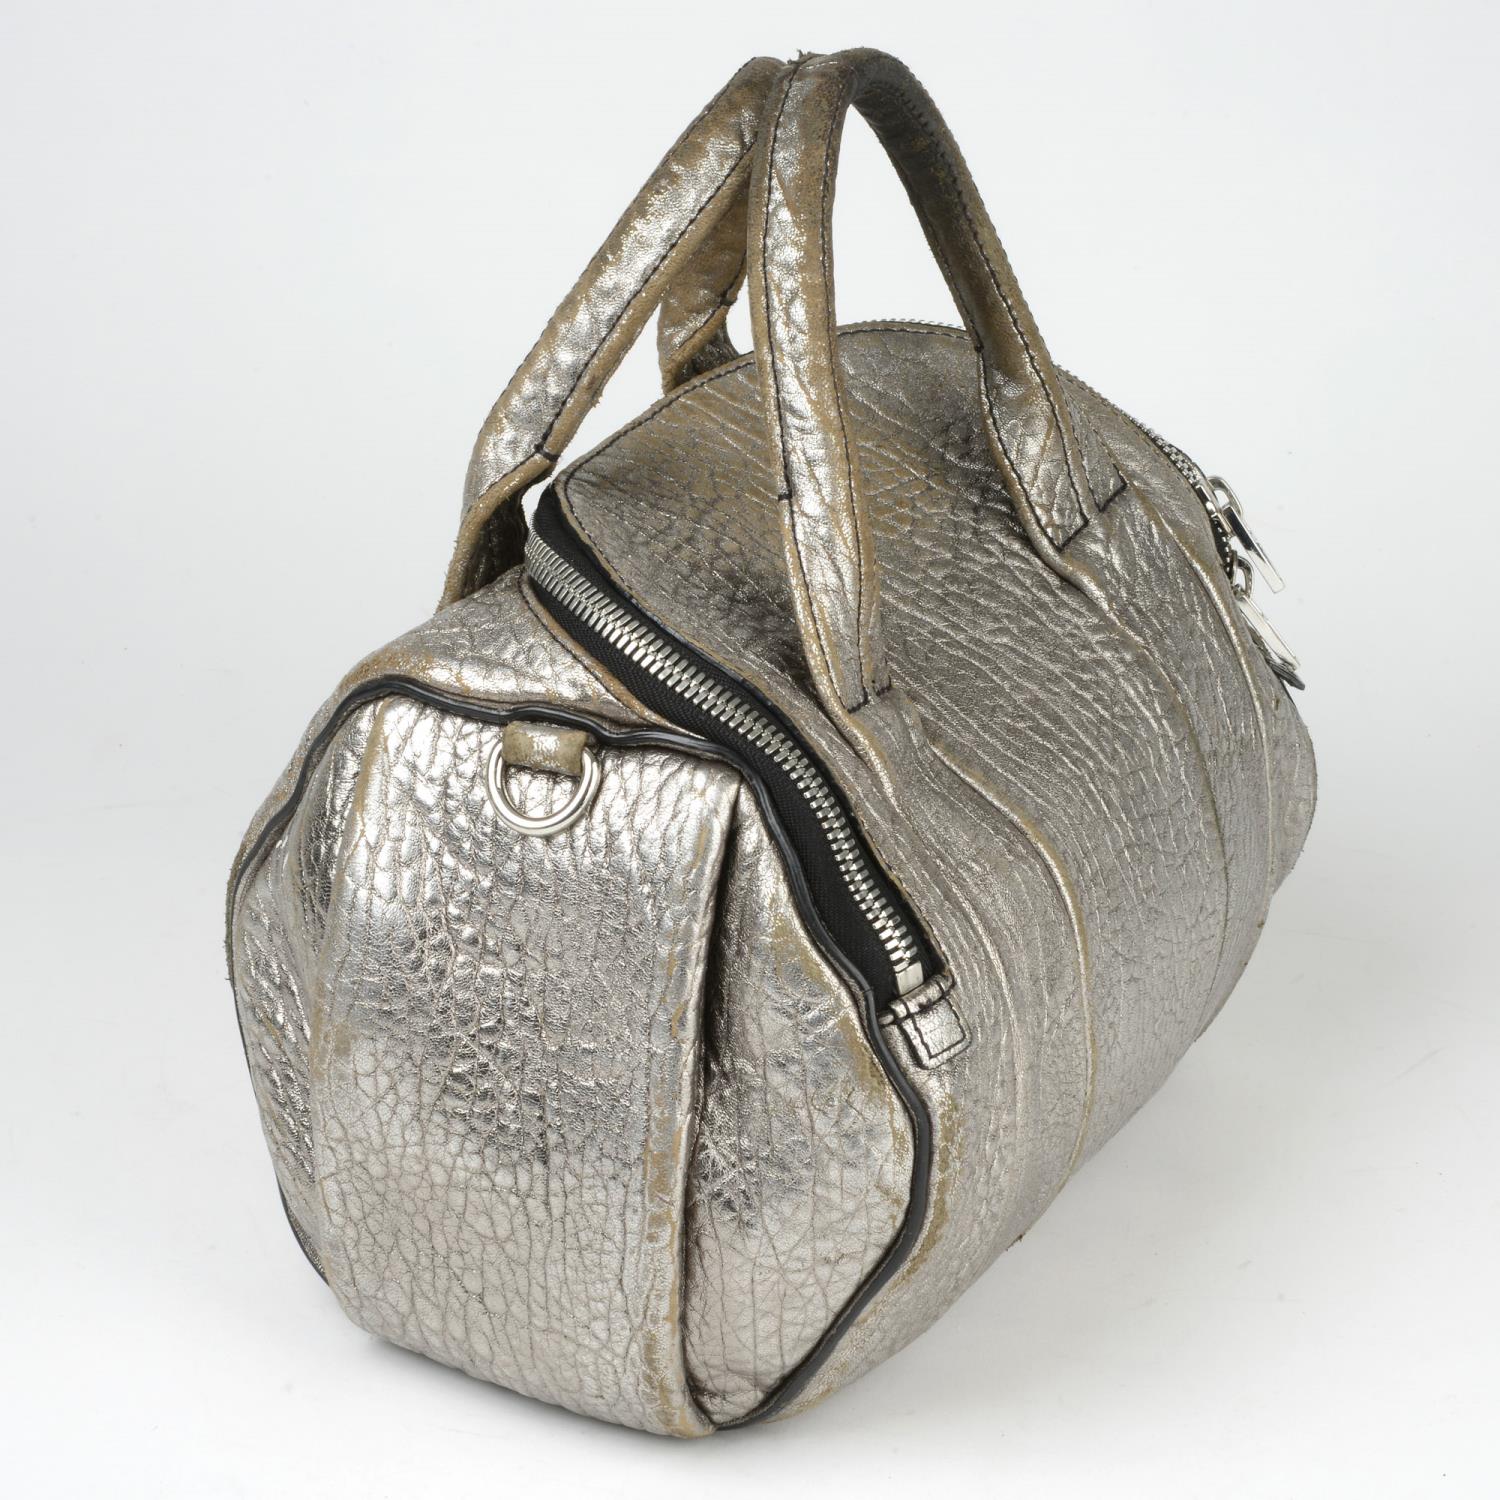 ALEXANDER WANG - a Rockie leather handbag. - Image 2 of 5